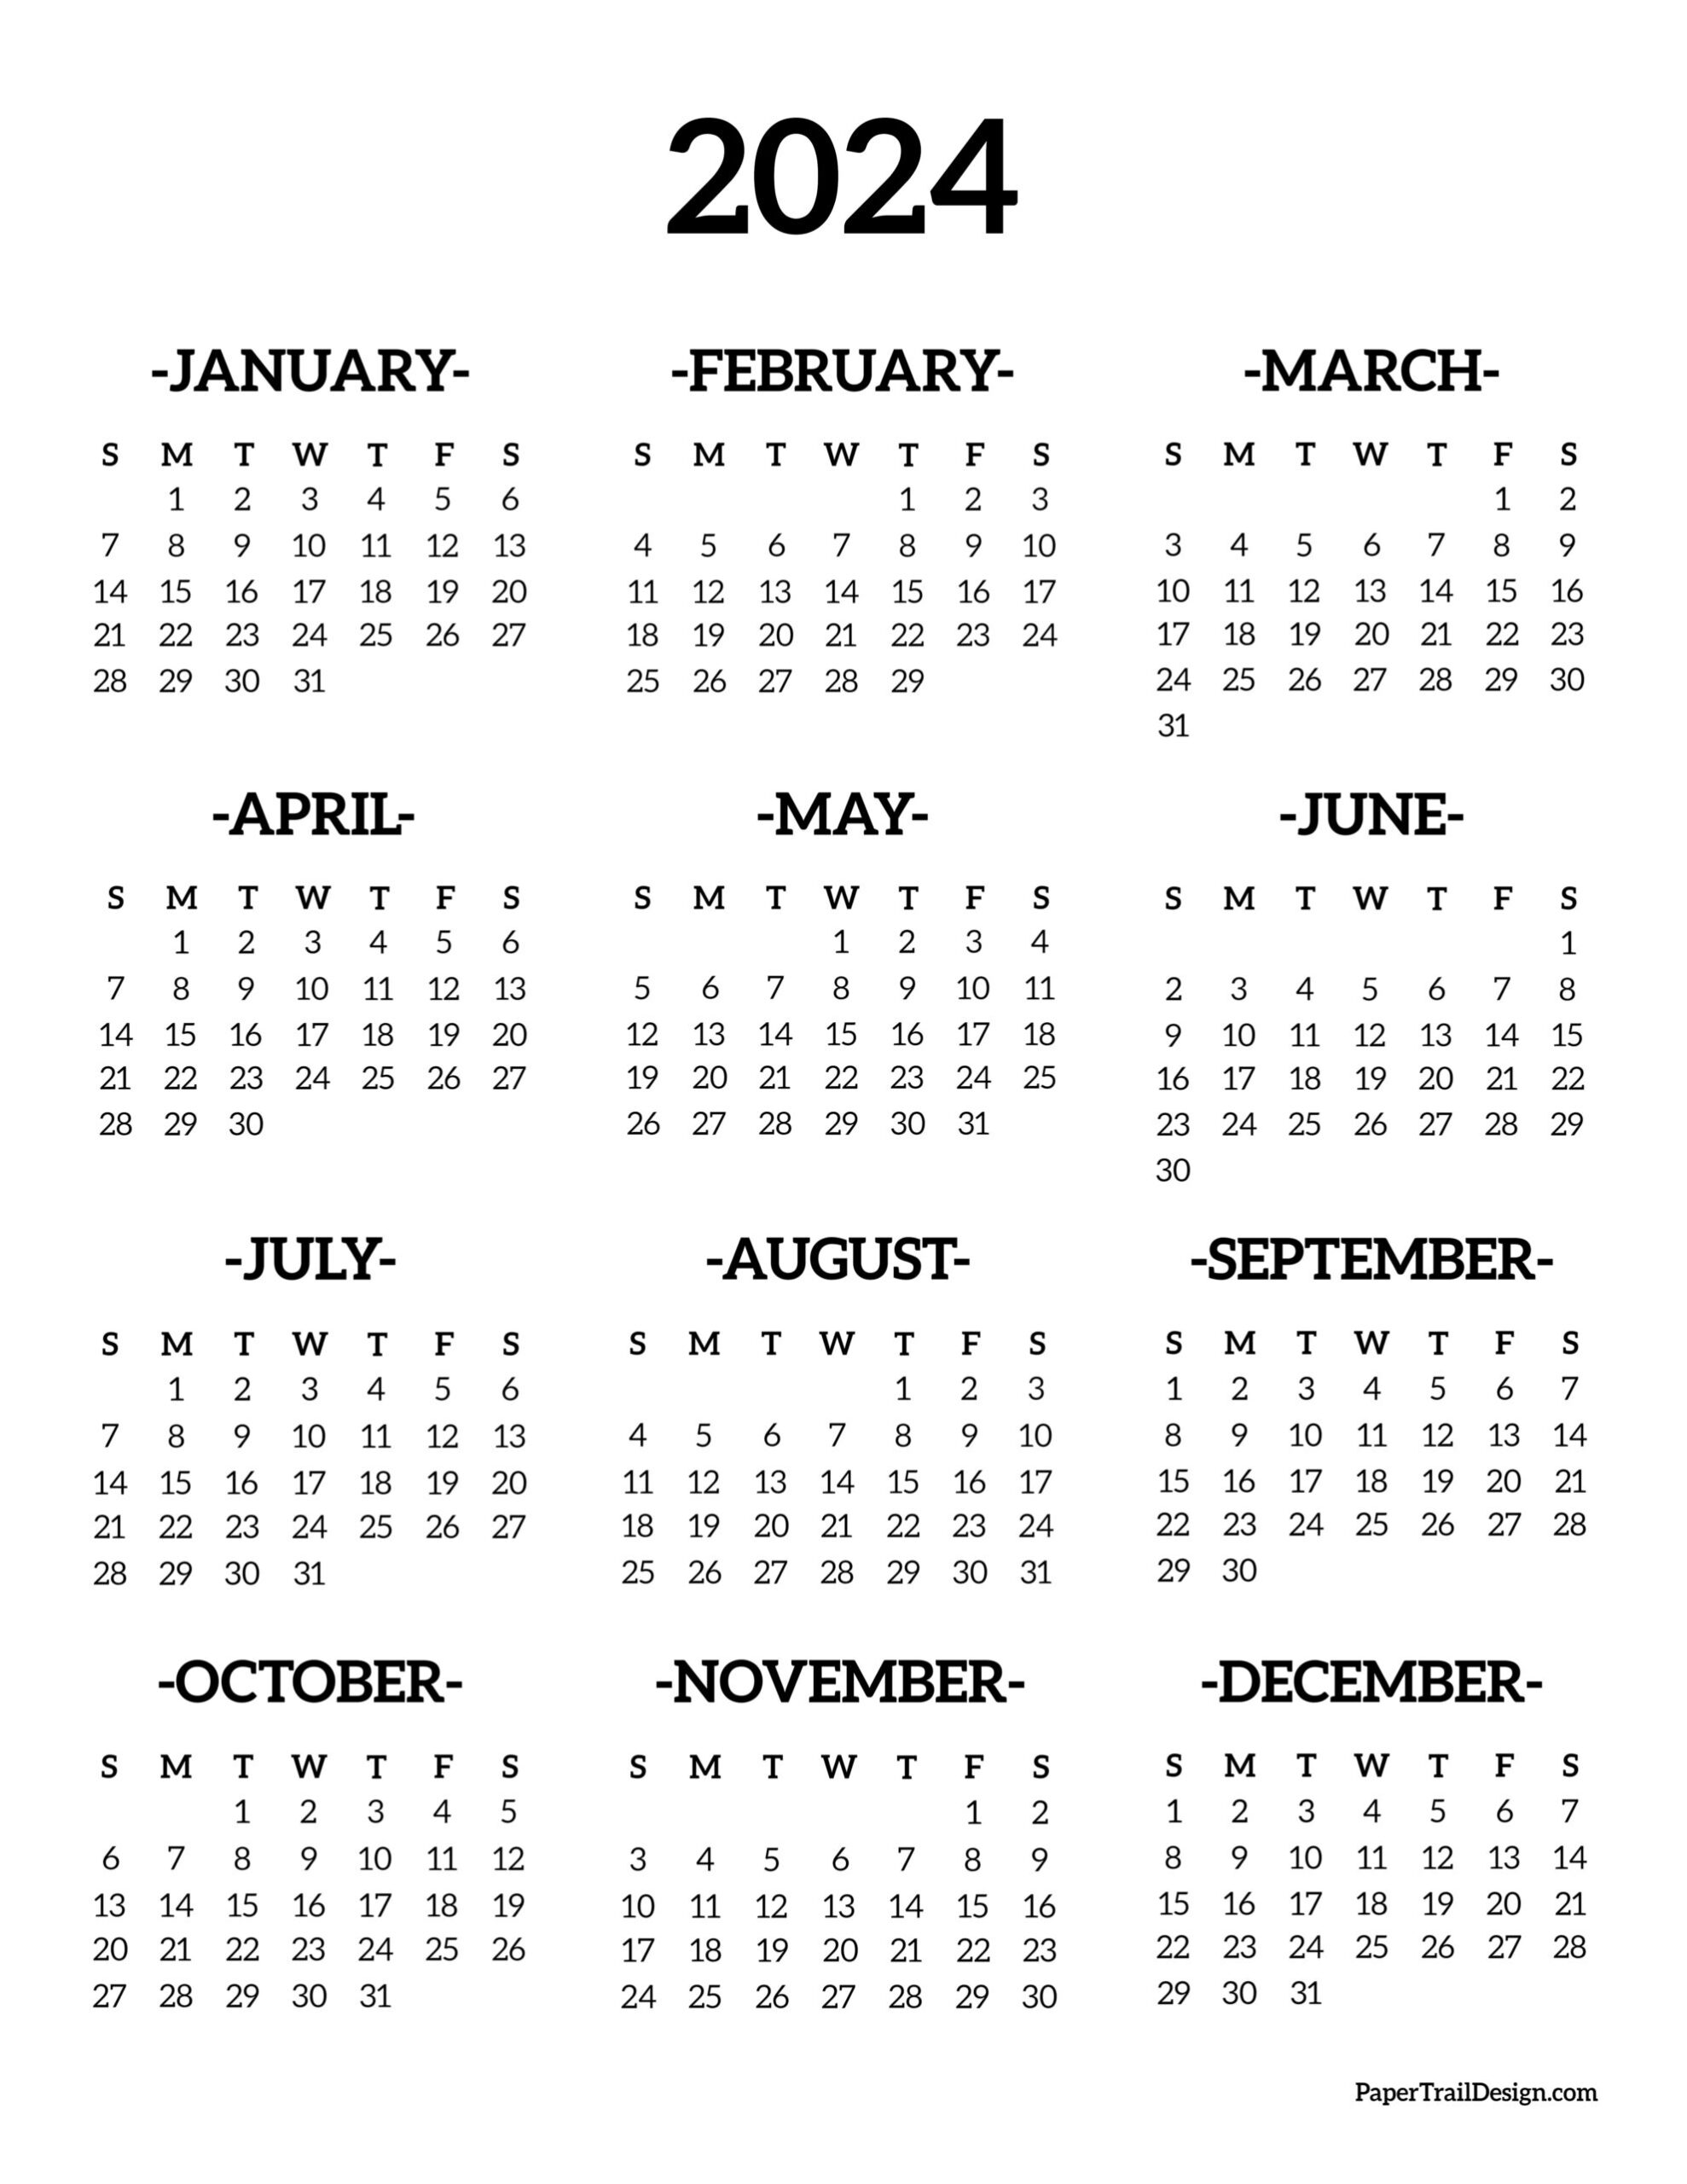 Calendar 2024 Printable One Page - Paper Trail Design | 2024 Annual Calendar Template